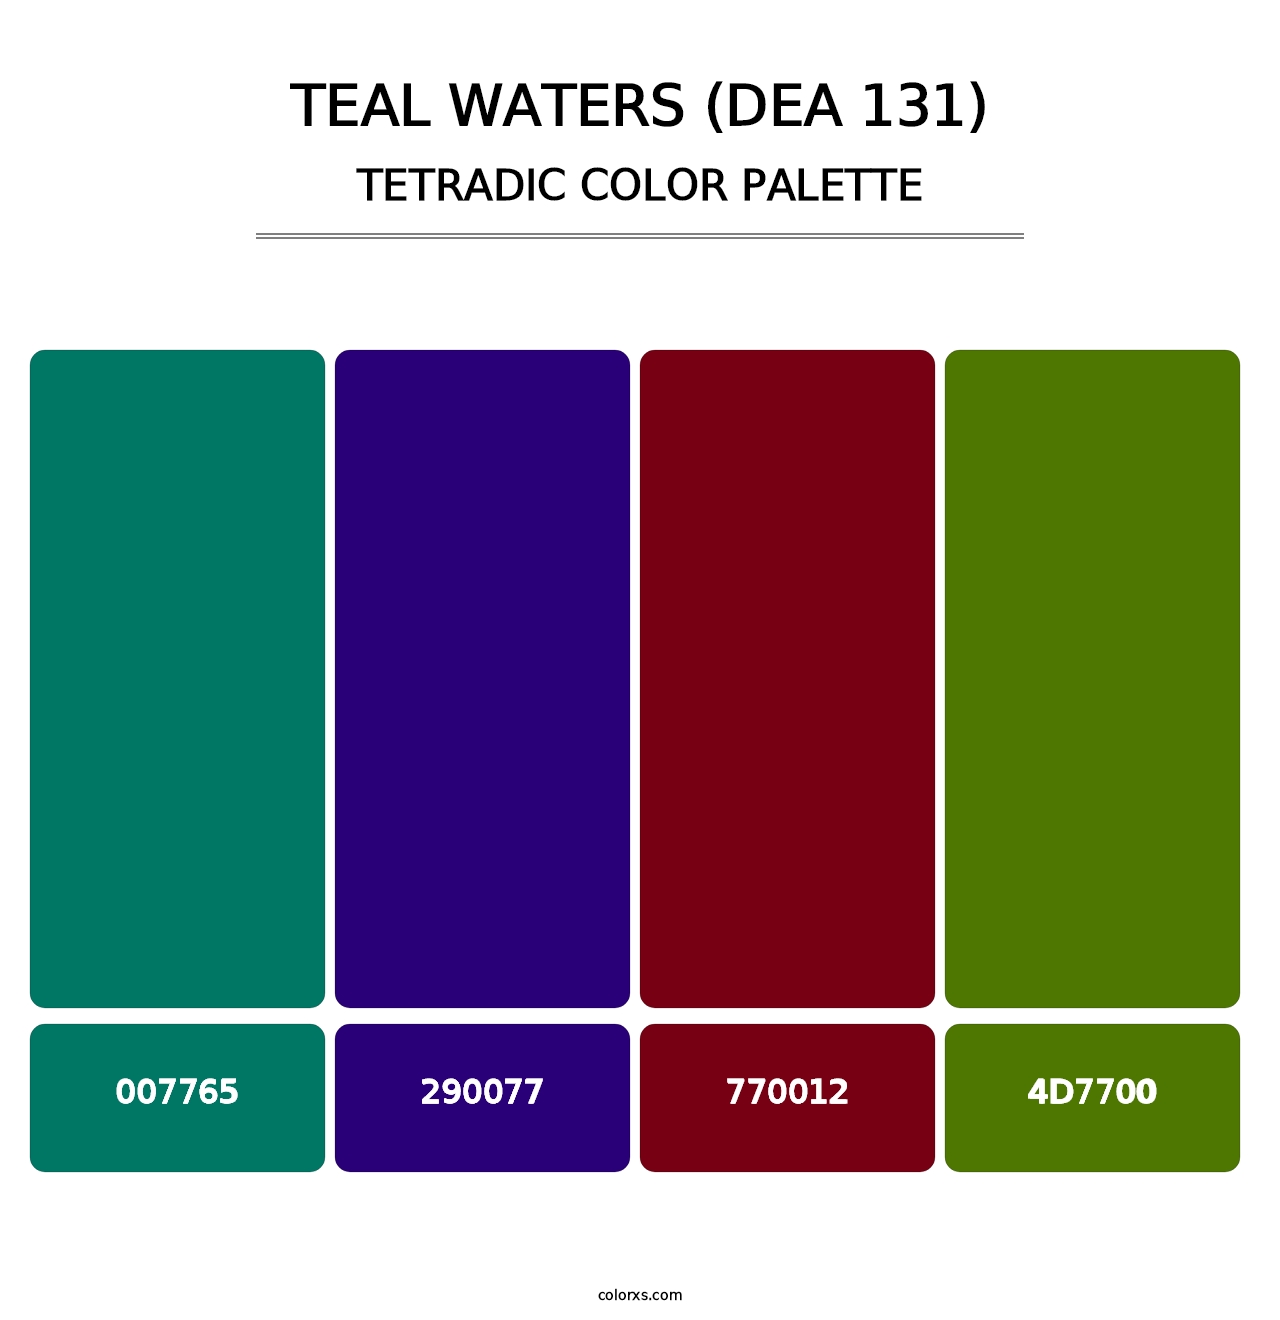 Teal Waters (DEA 131) - Tetradic Color Palette